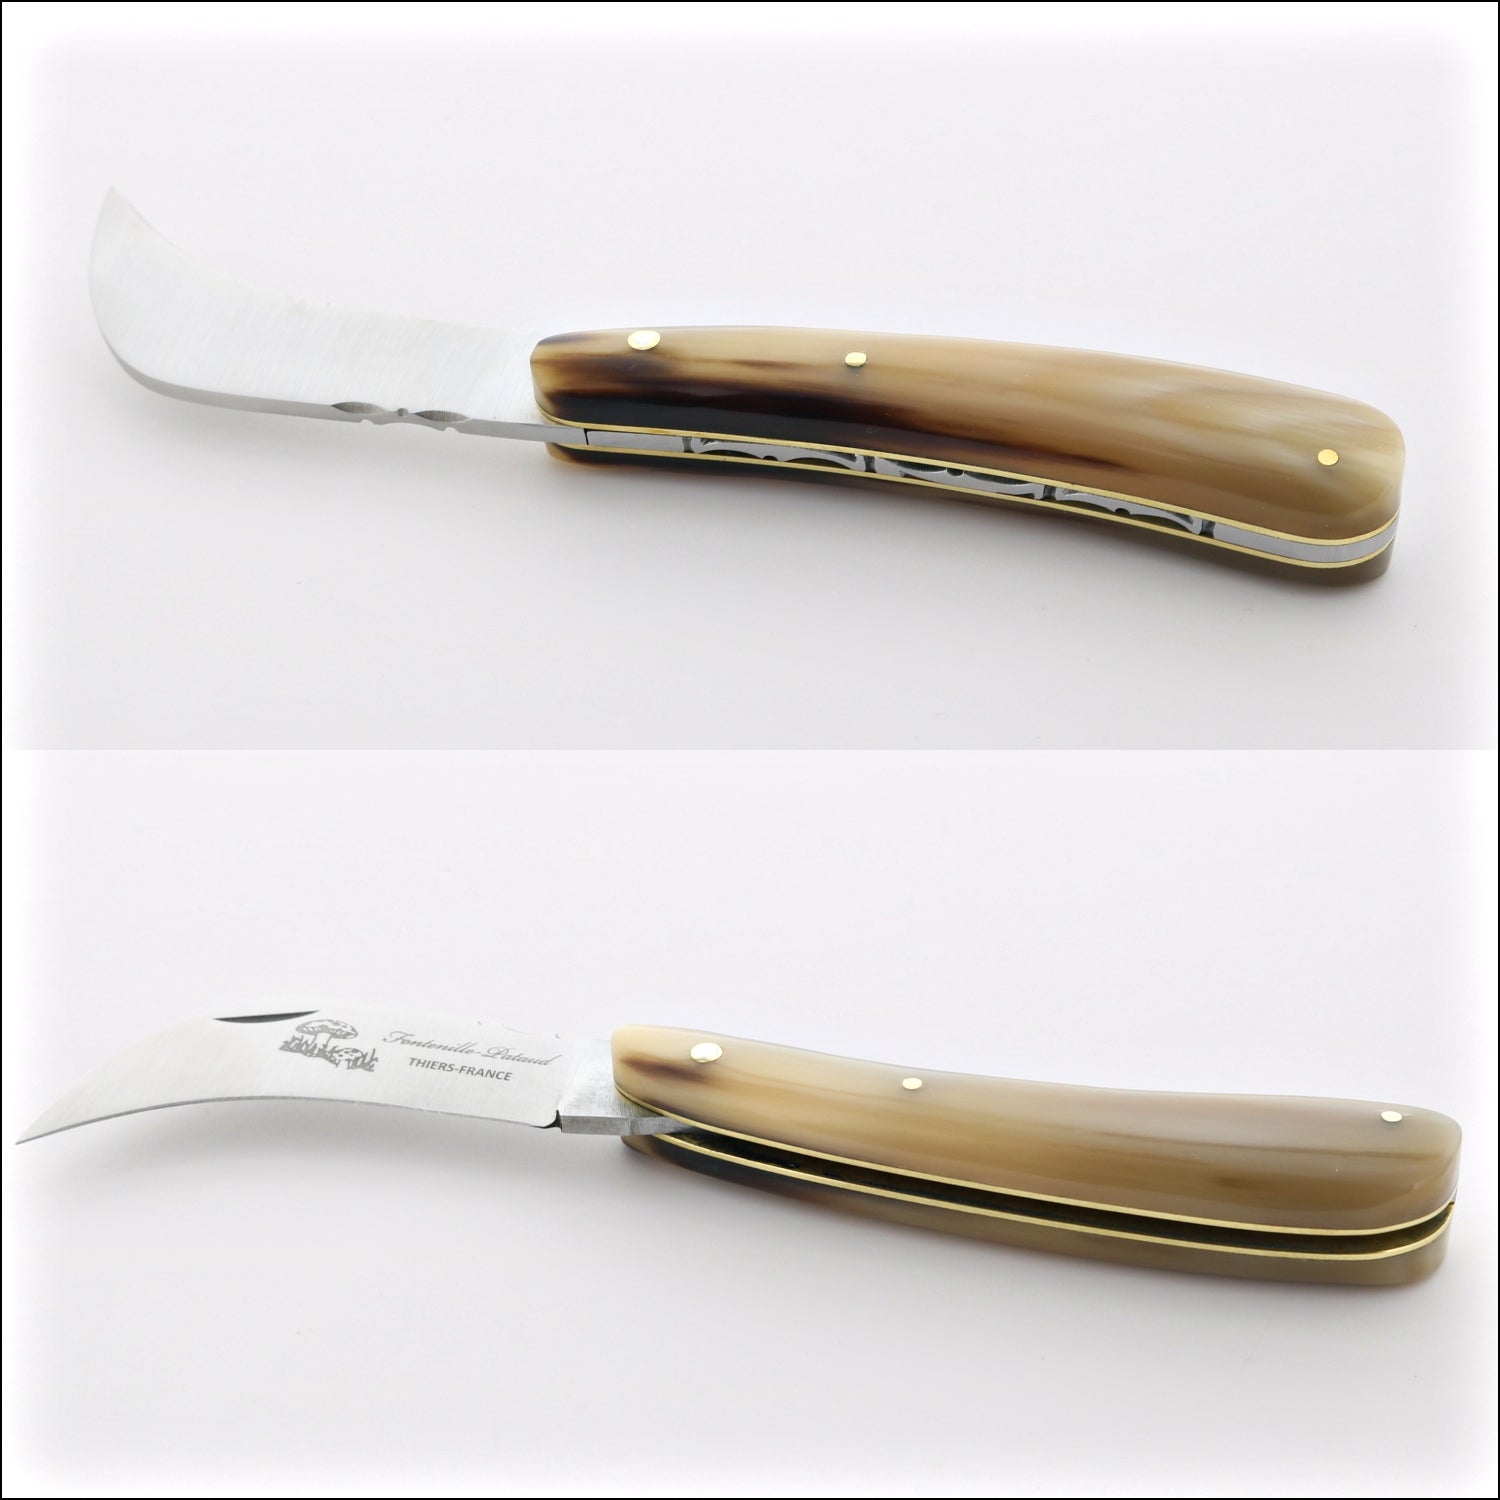 Mushroom Knife - Garden Knife Light Horn Tip Handle by Fontenille Pataud